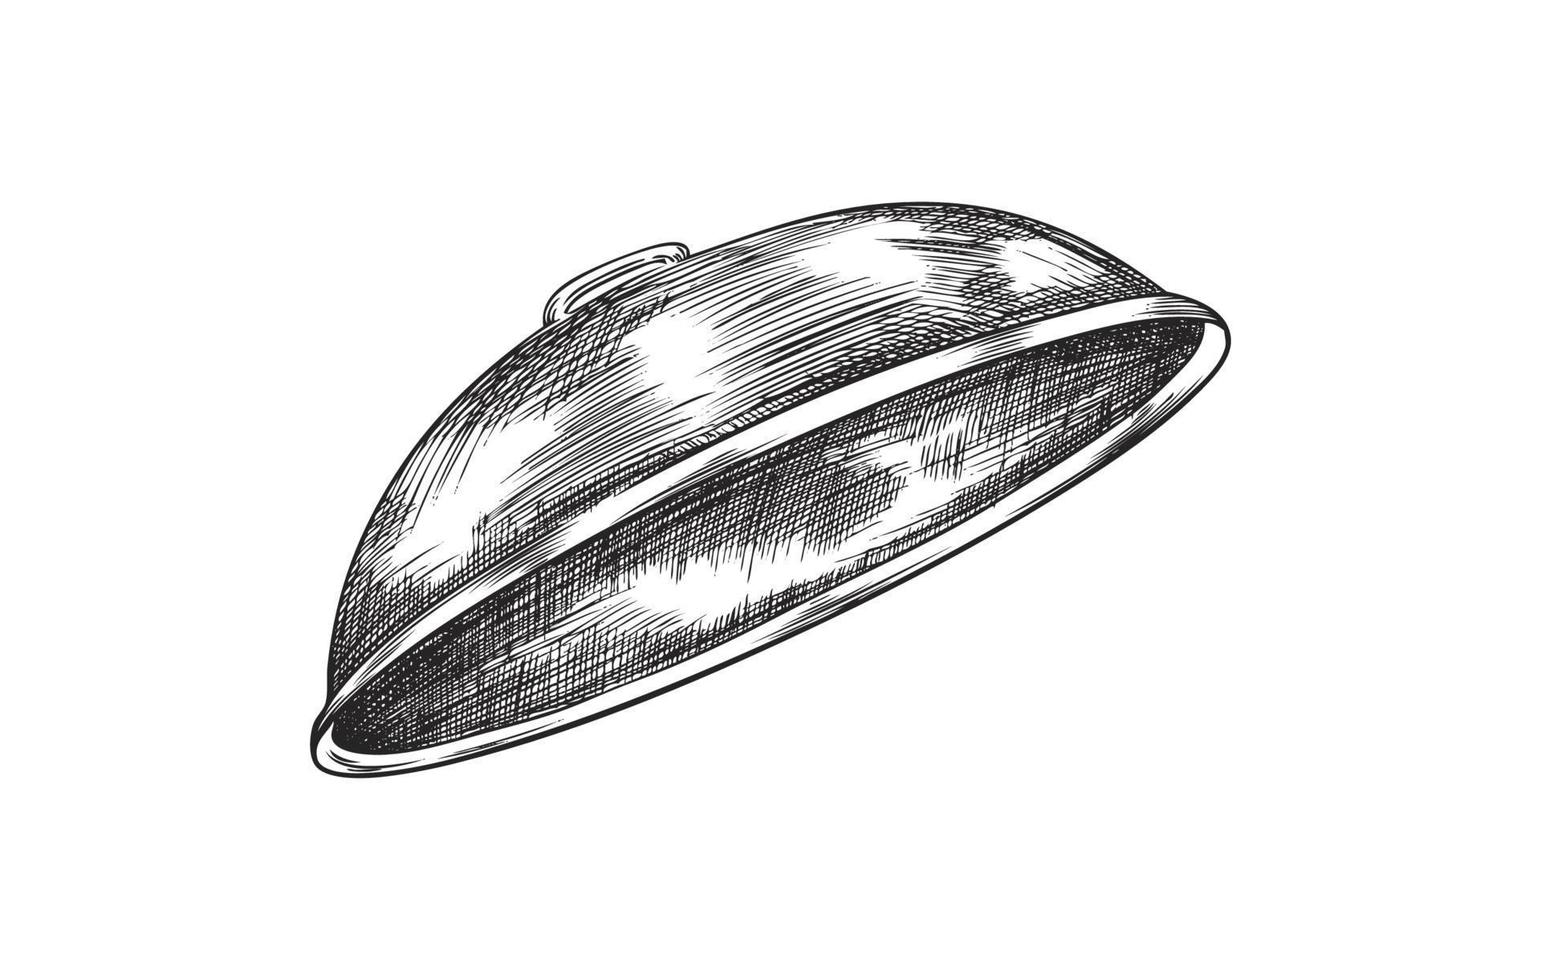 mano dibujado redondo monocromo tapa para picnic parrilla, vector ilustración